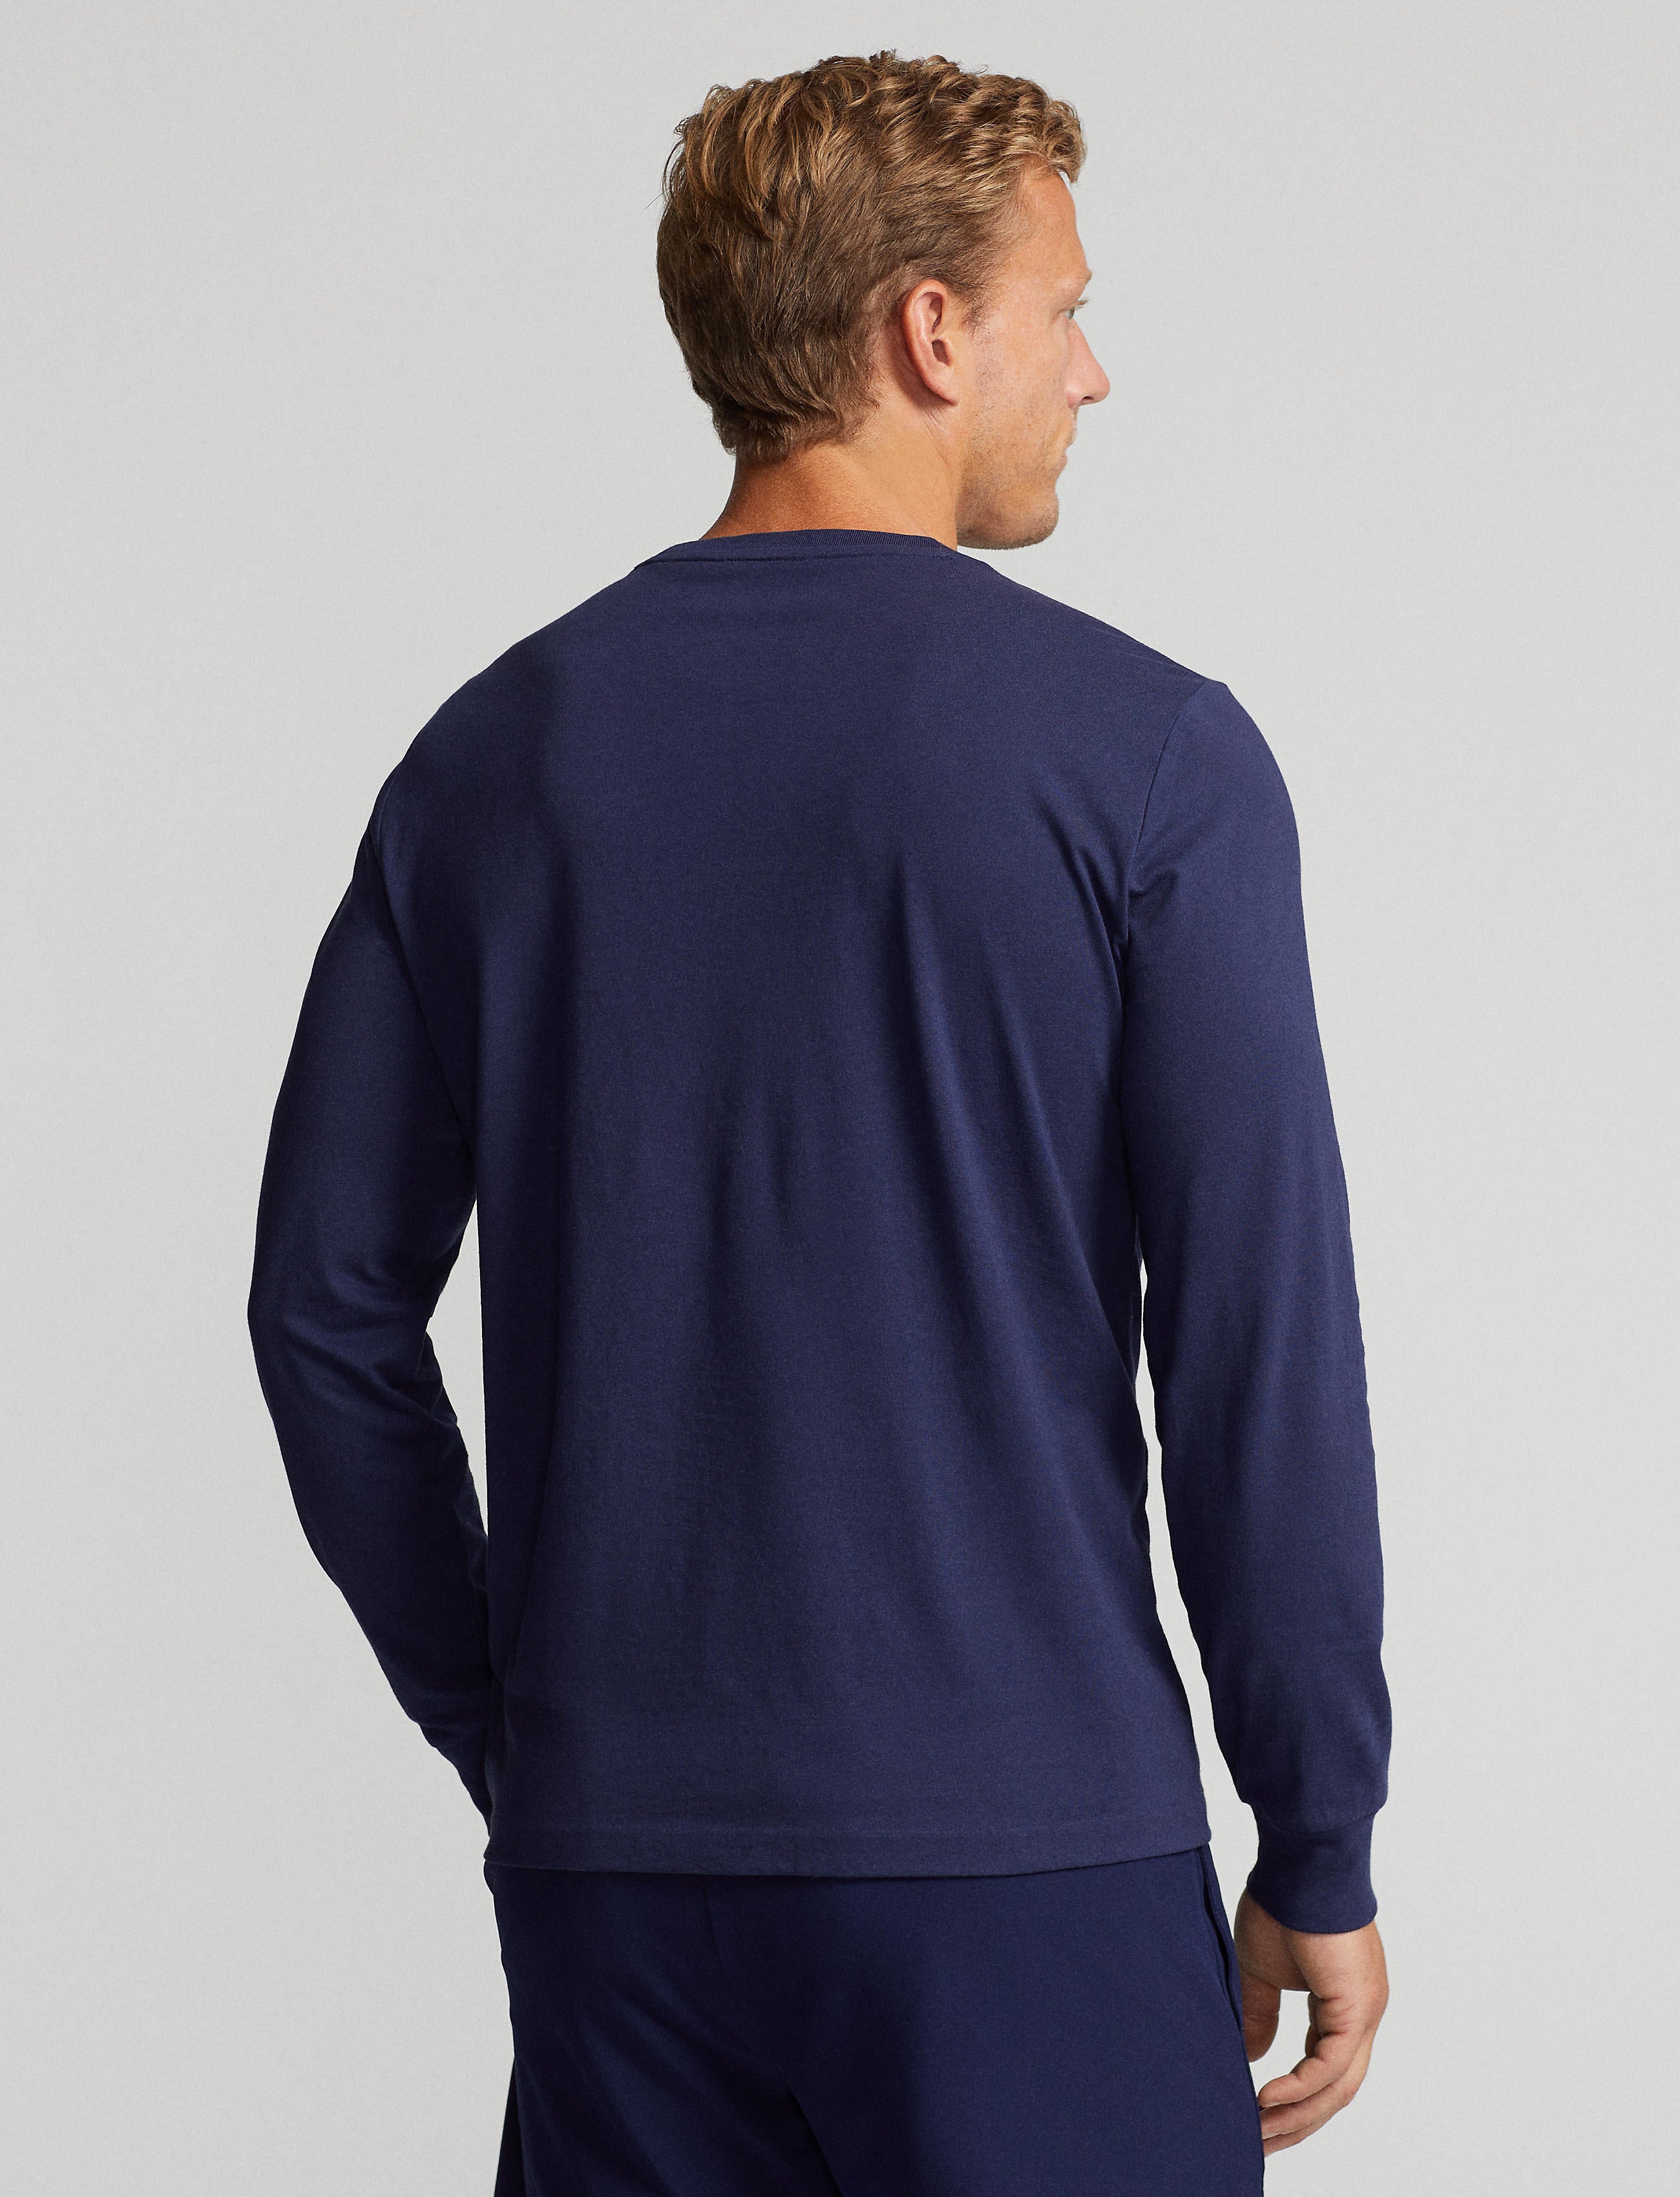 Men's Navy Long-Sleeved T-Shirt Back View